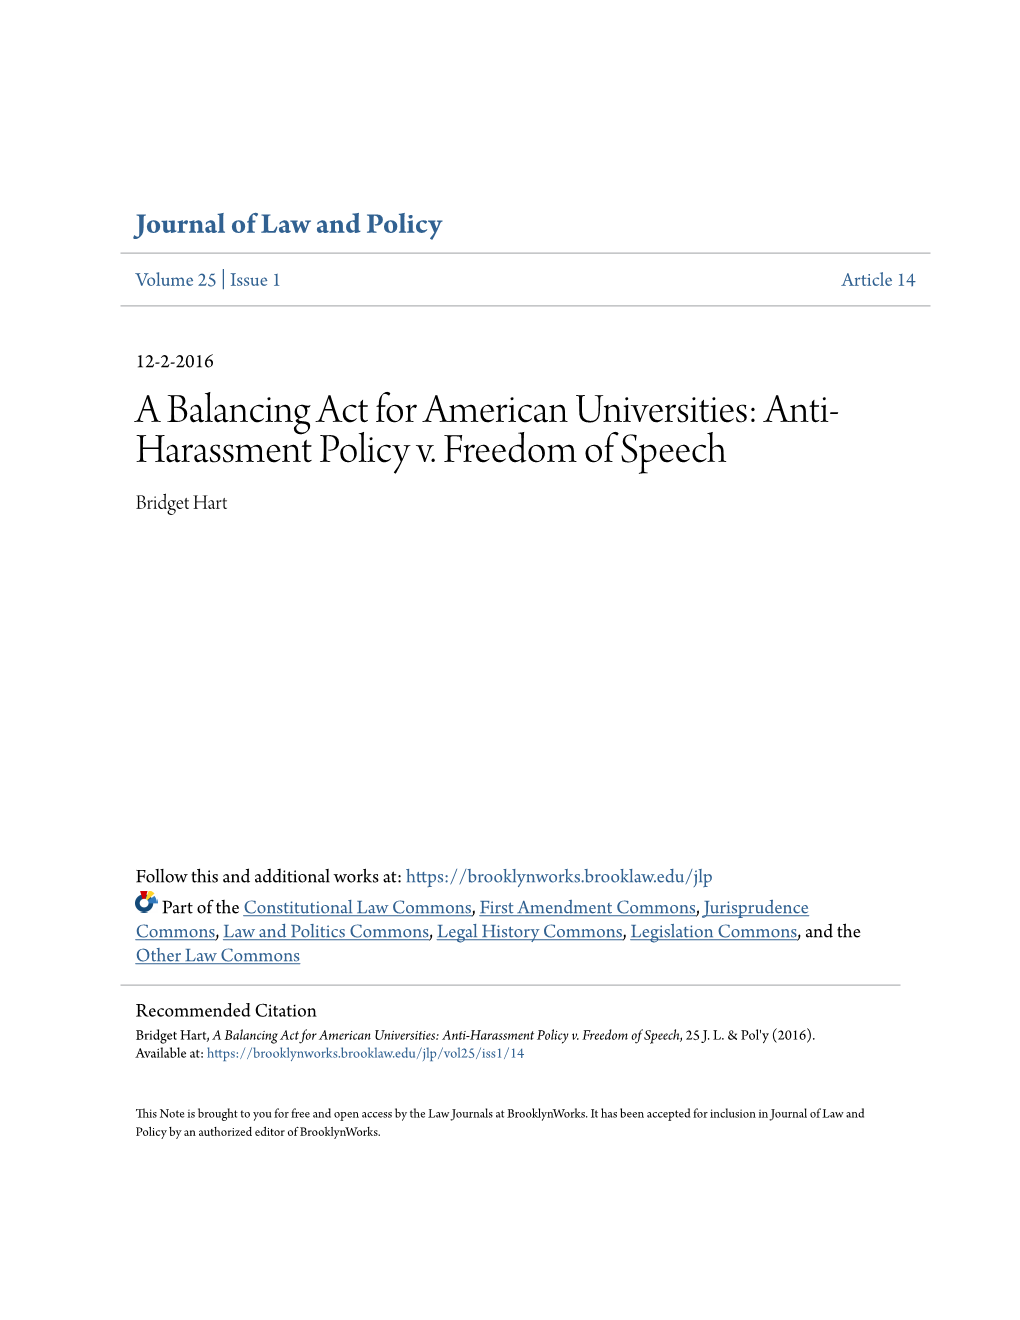 Anti-Harassment Policy V. Freedom of Speech, 25 J